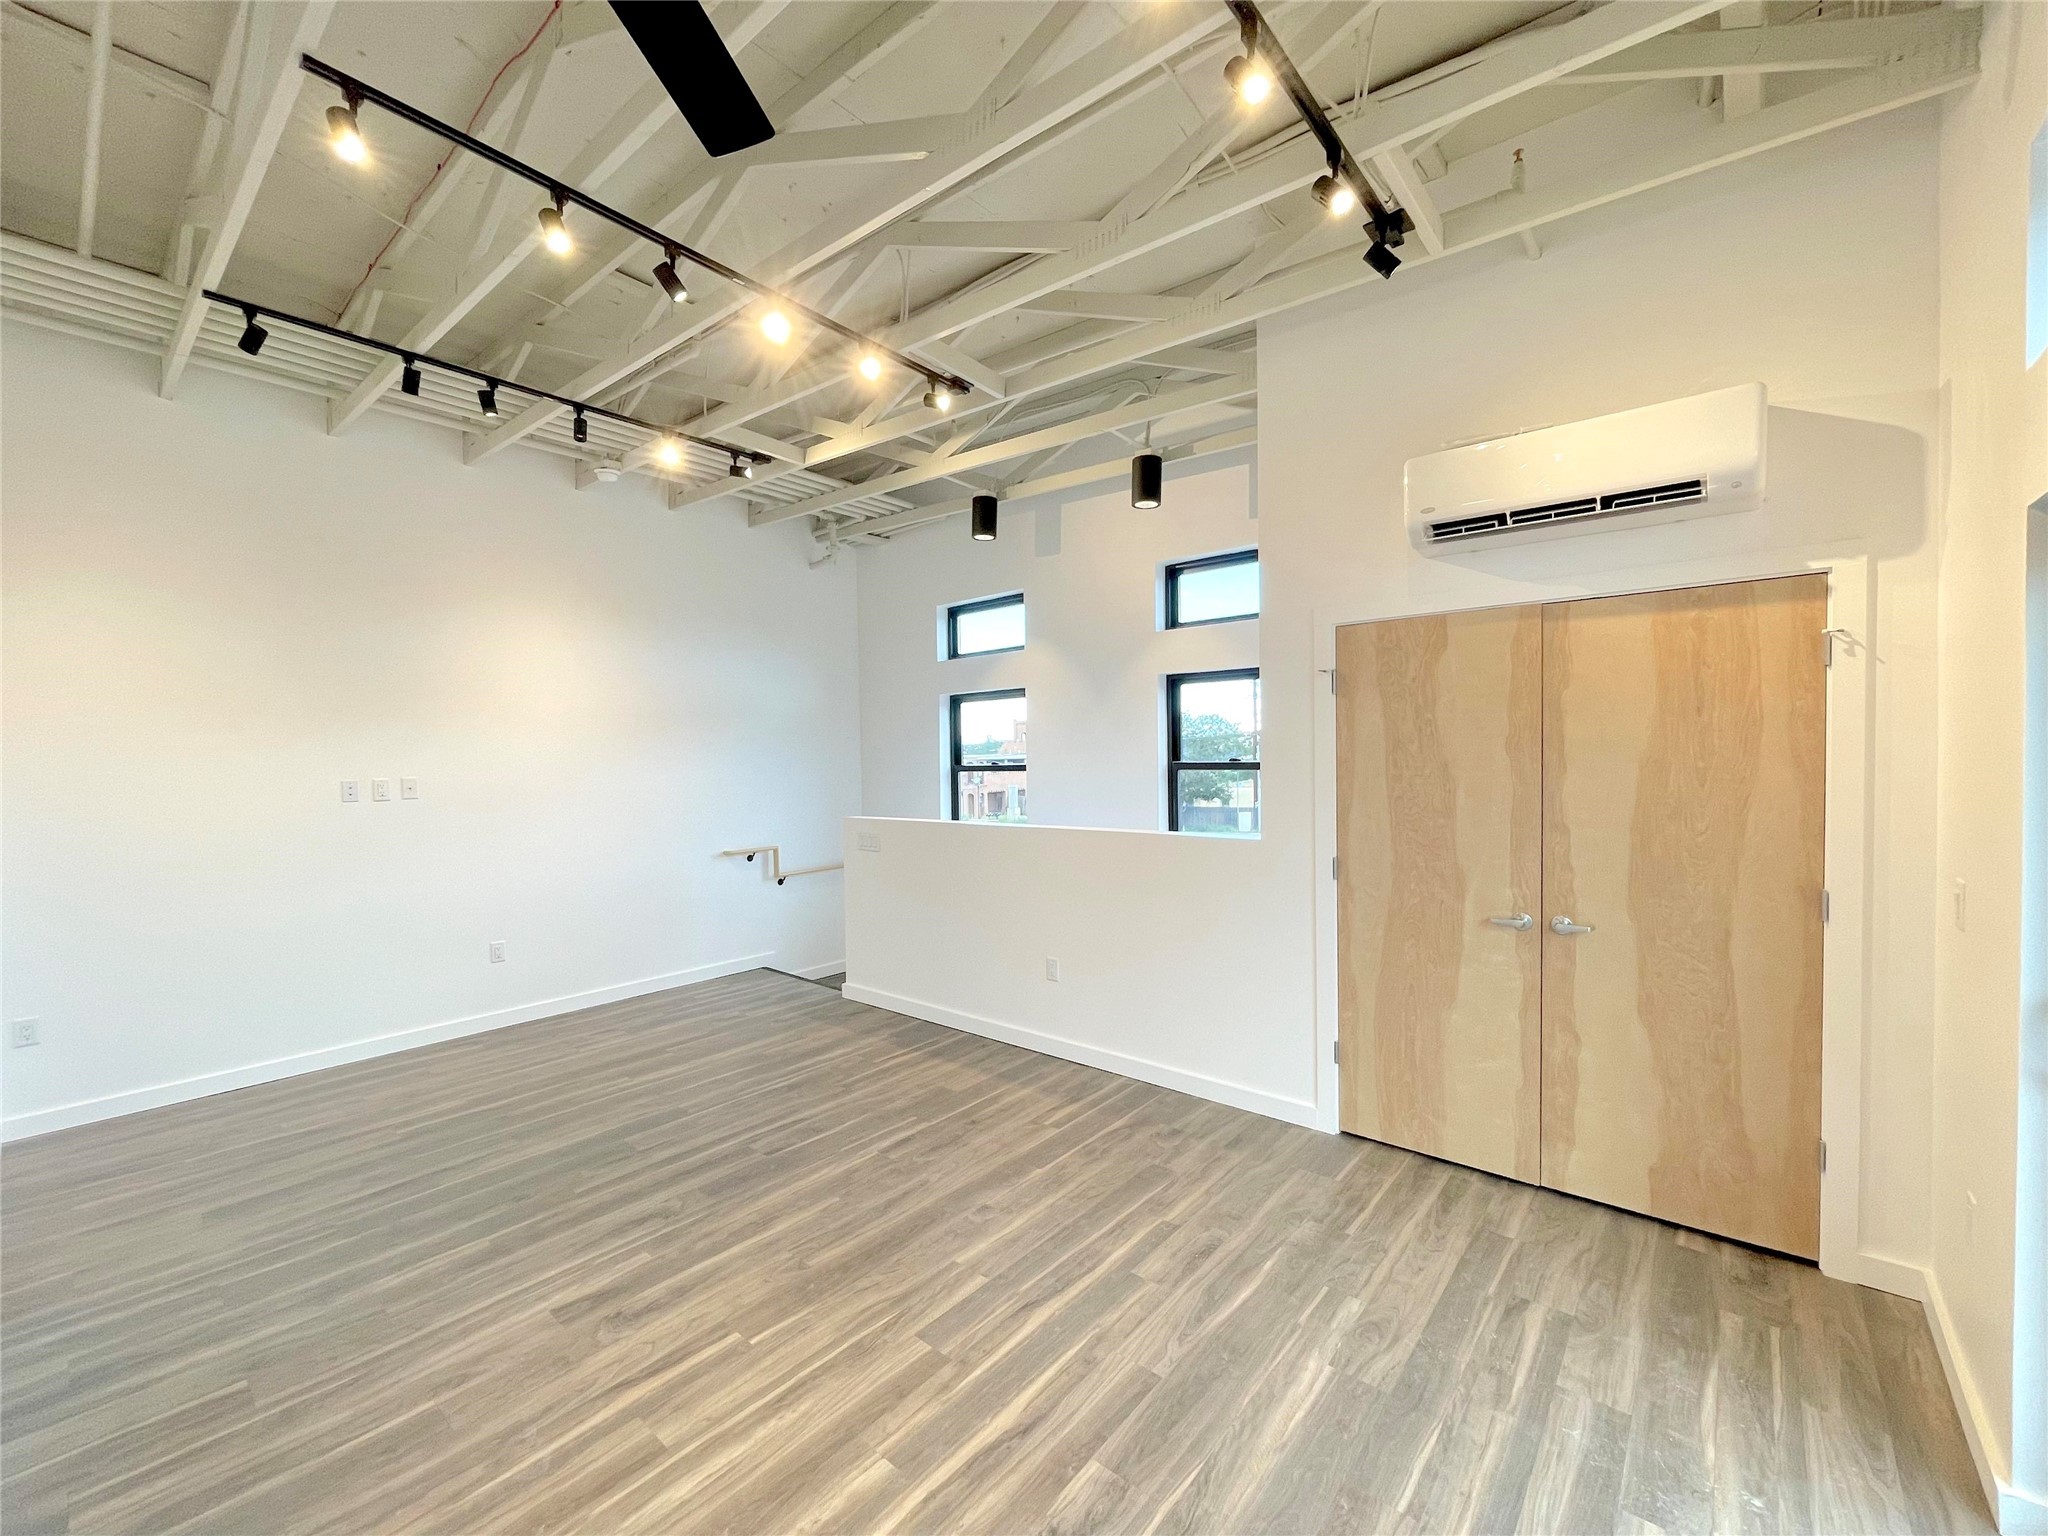 Second Level - Open Studio Space